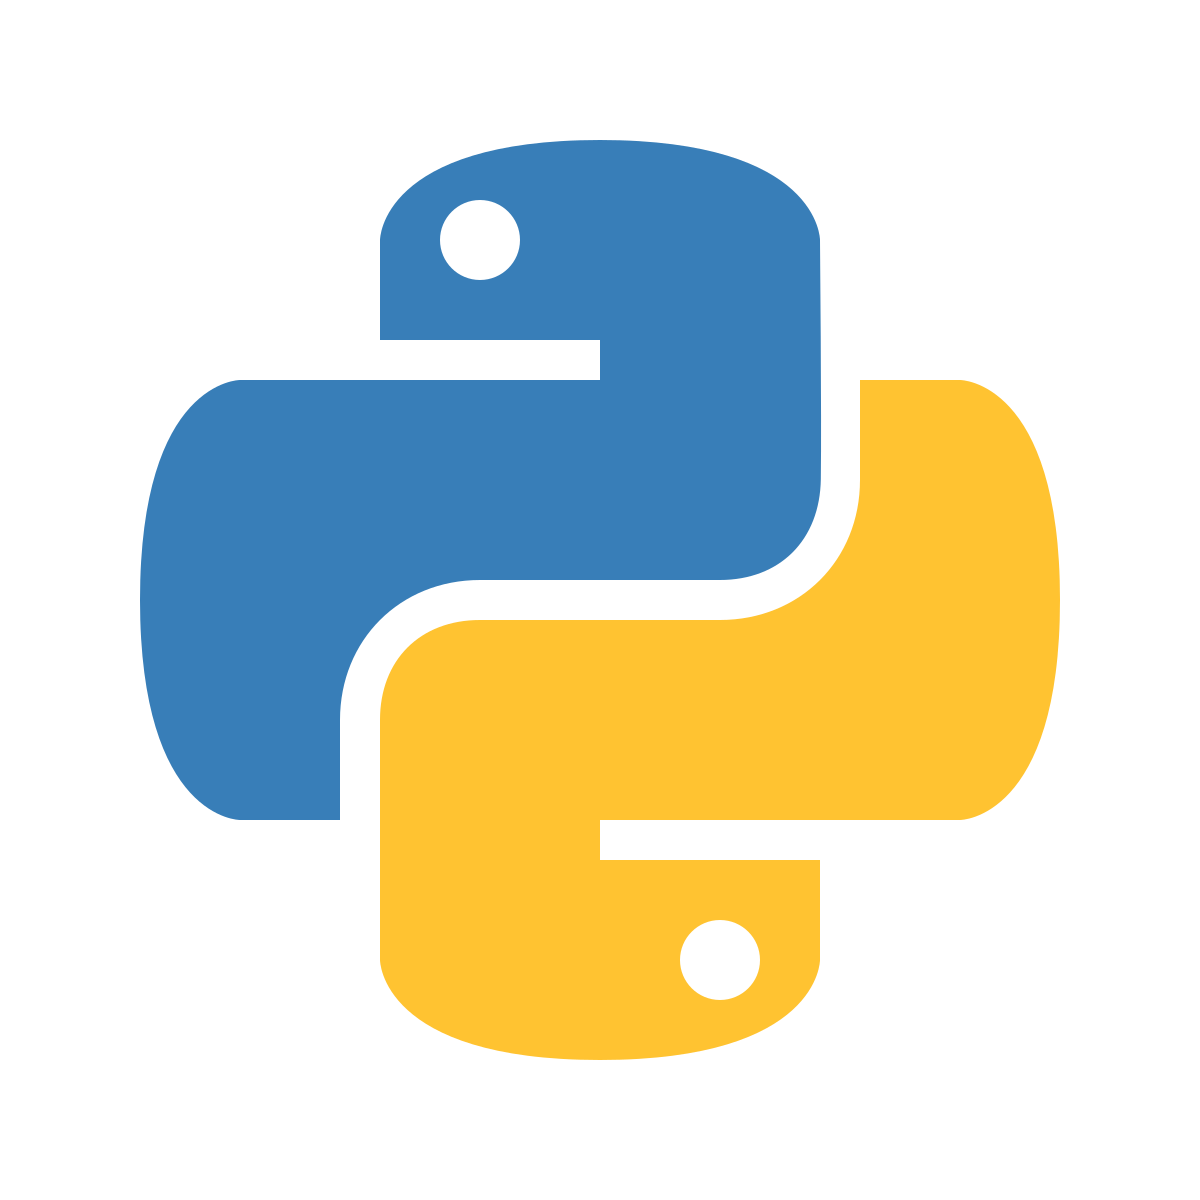 [Python] numpy - np.linspace와 np.arange의 차이점